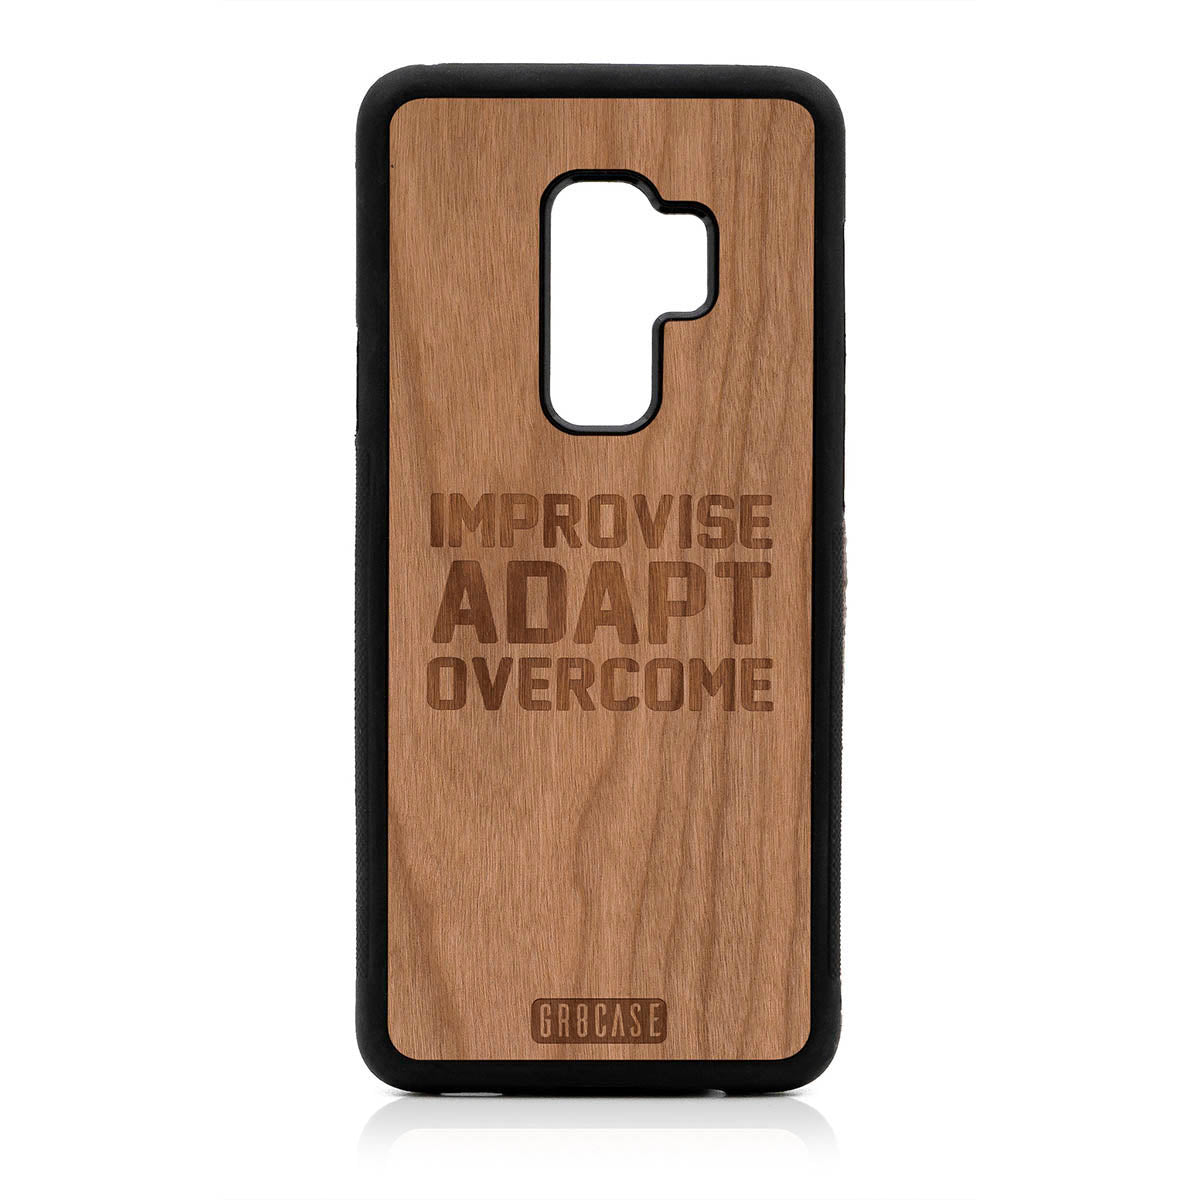 Improvise Adapt Overcome Design Wood Case For Samsung Galaxy S9 Plus